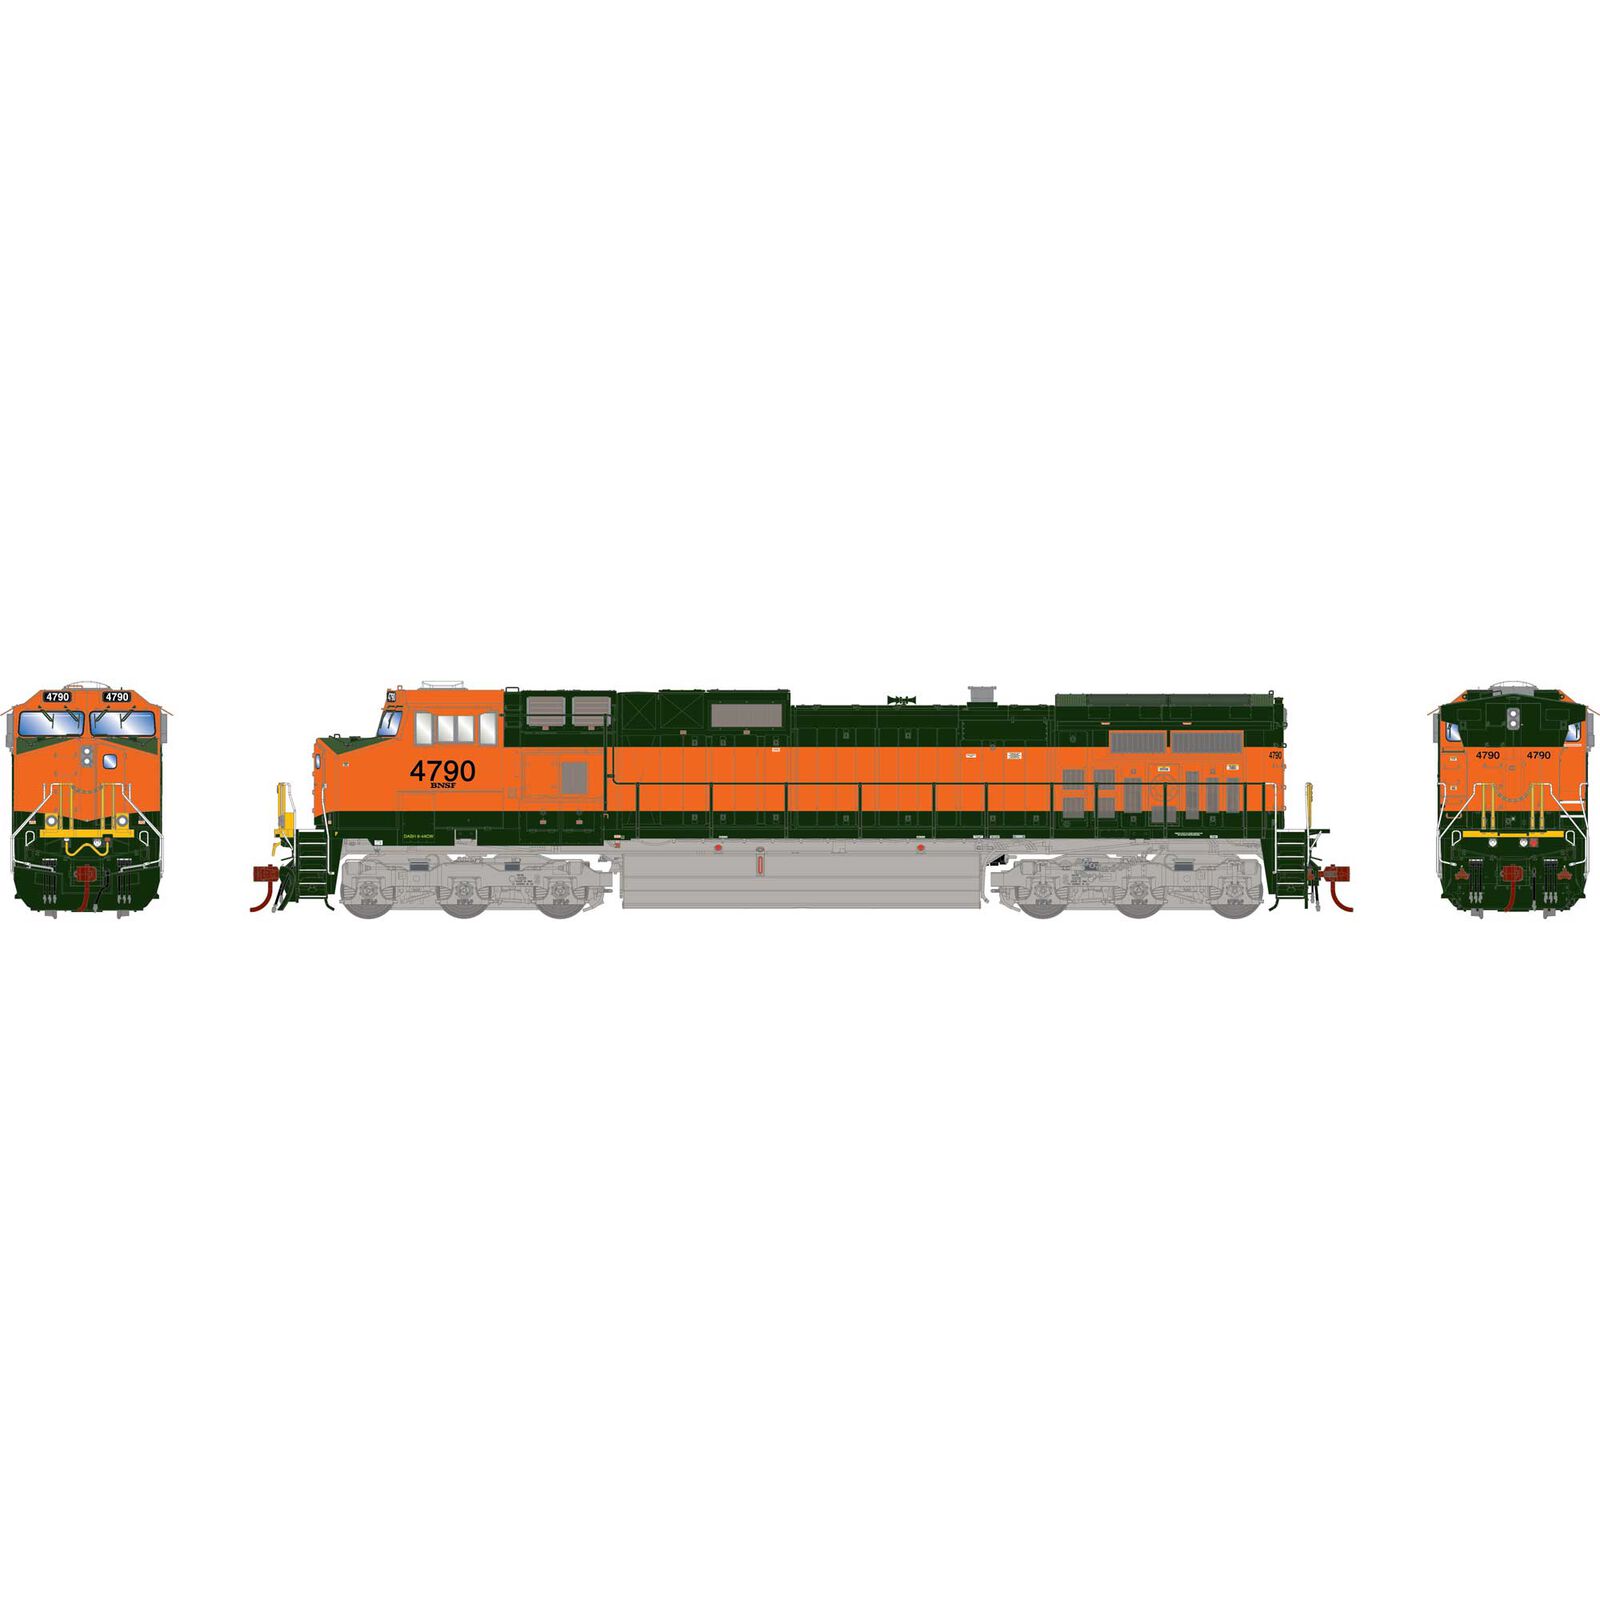 HO Dash 9-44CW Locomotive with DCC & Sound, BNSF #4790